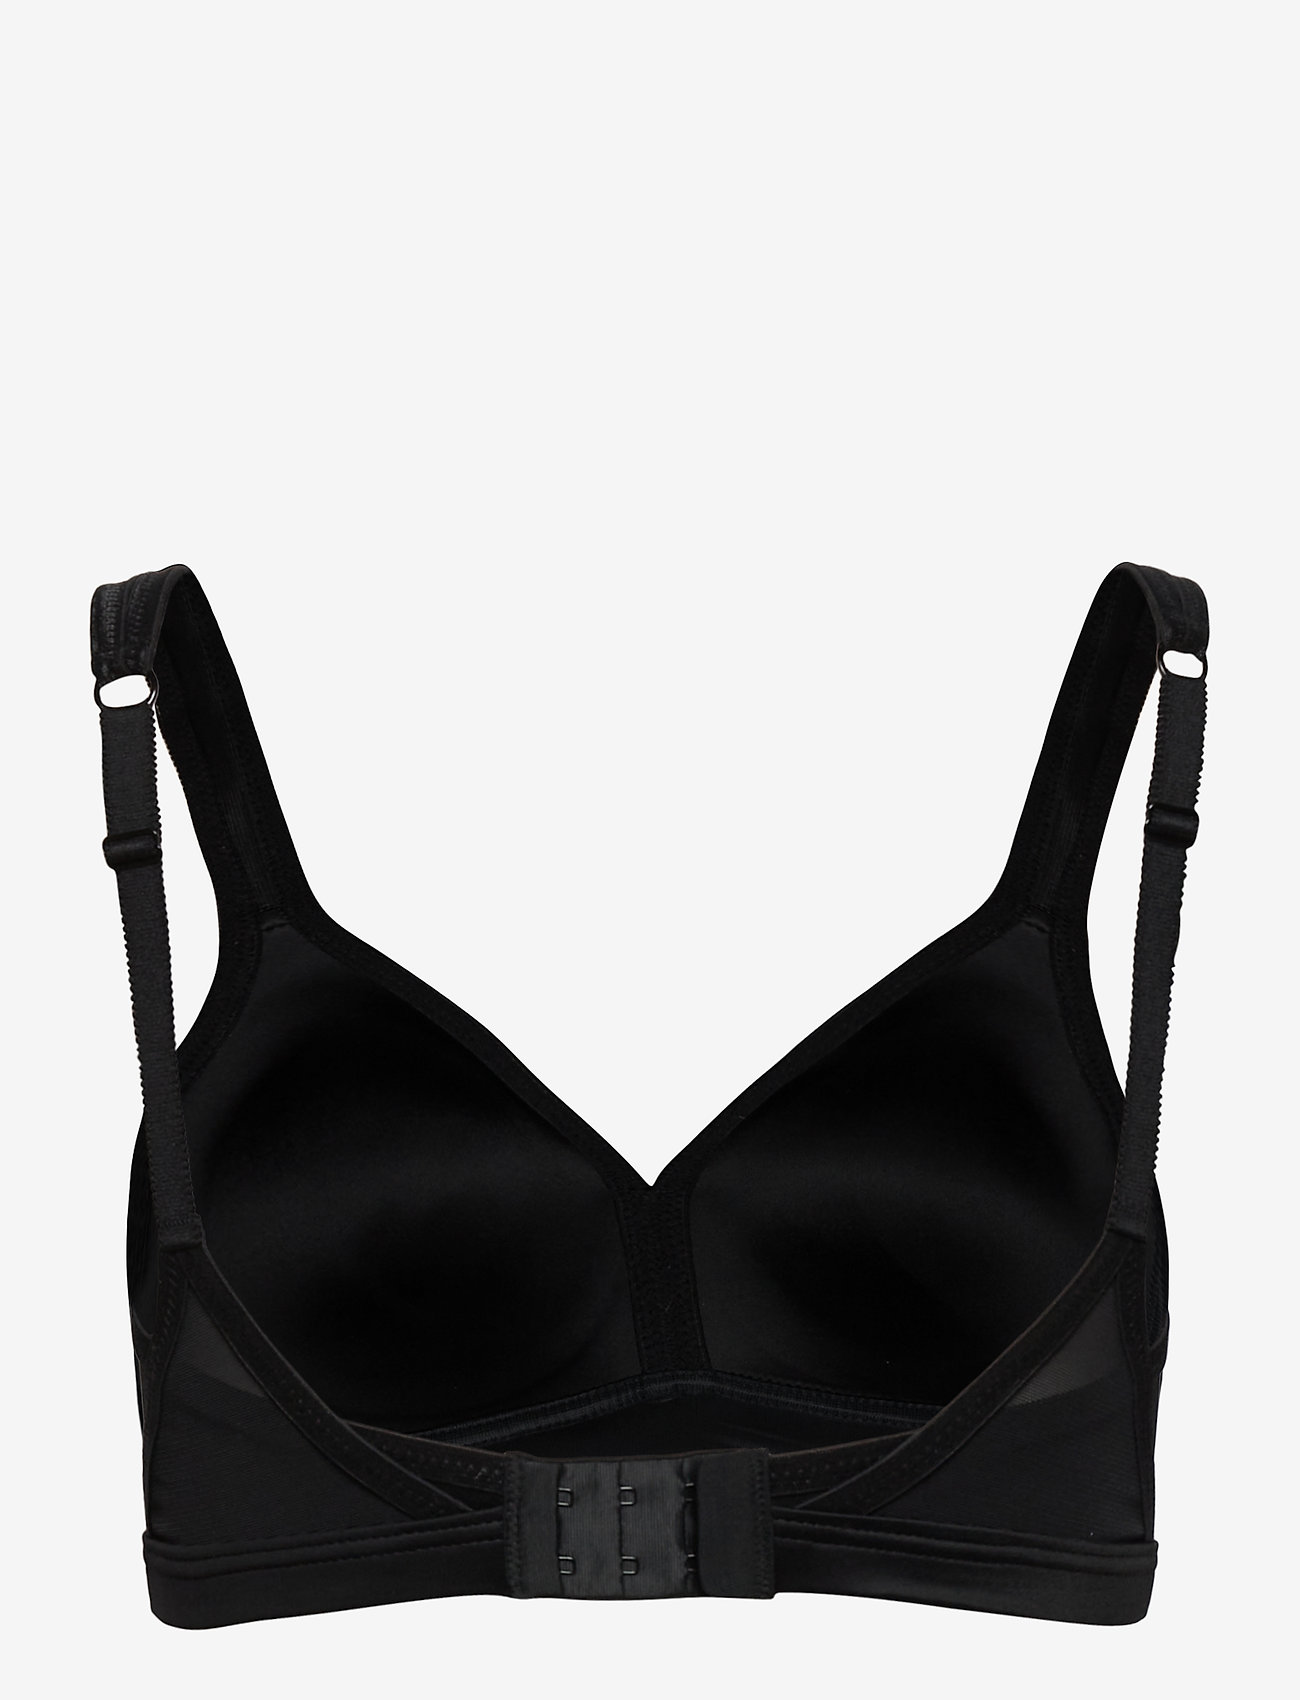 Abecita - Spacer Sence Soft bra Black - tank top bras - black - 1